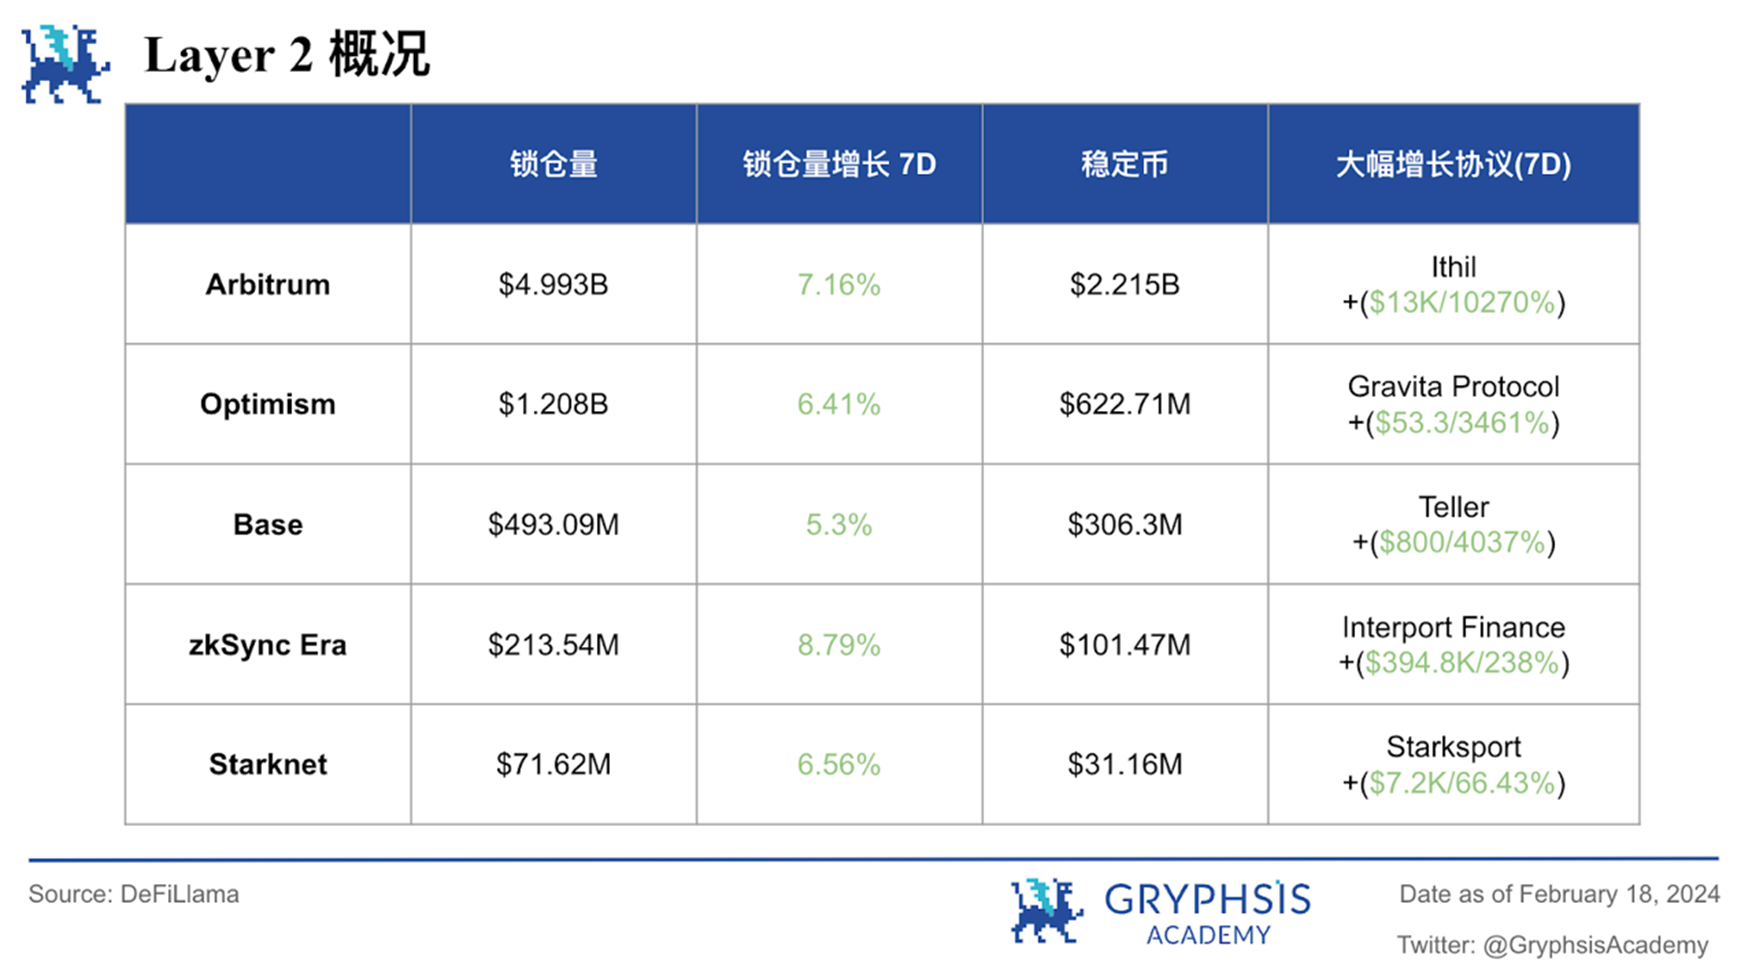  Gryphsis 加密货币周报：比特币价格首次突破 $52,000